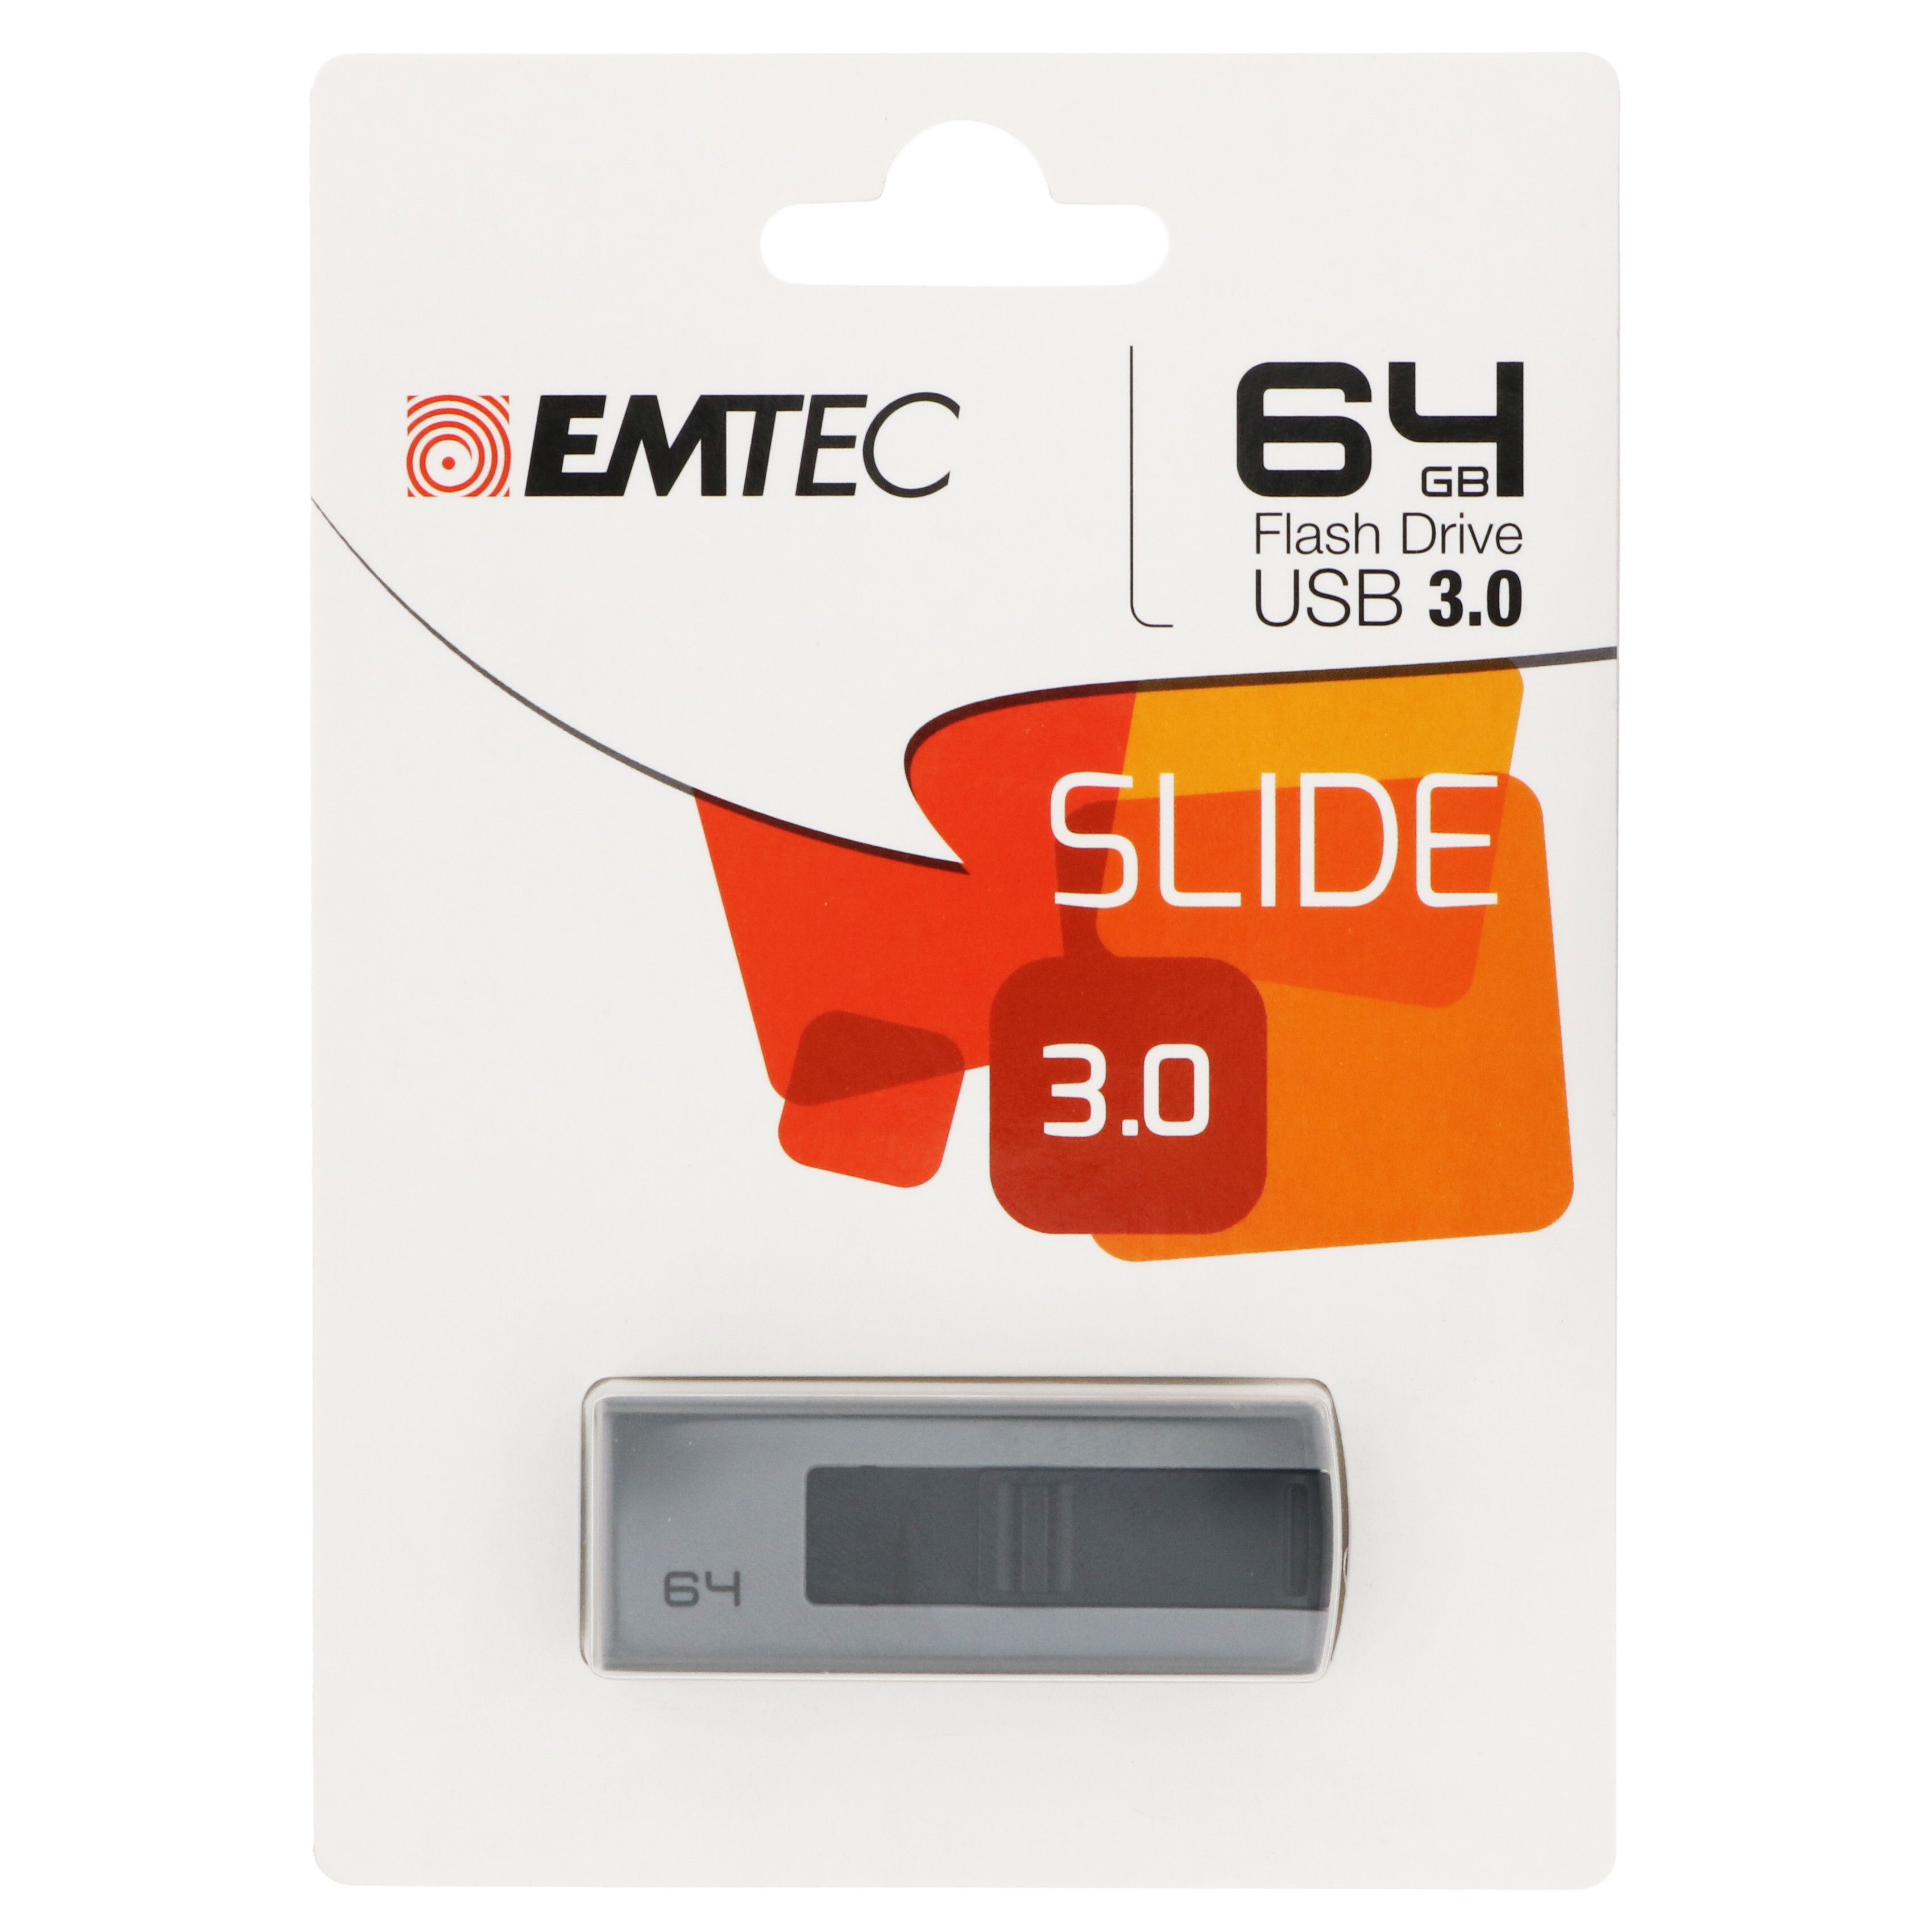 Slide 64 GB USB Flash Drive - Storage Devices at H-E-B